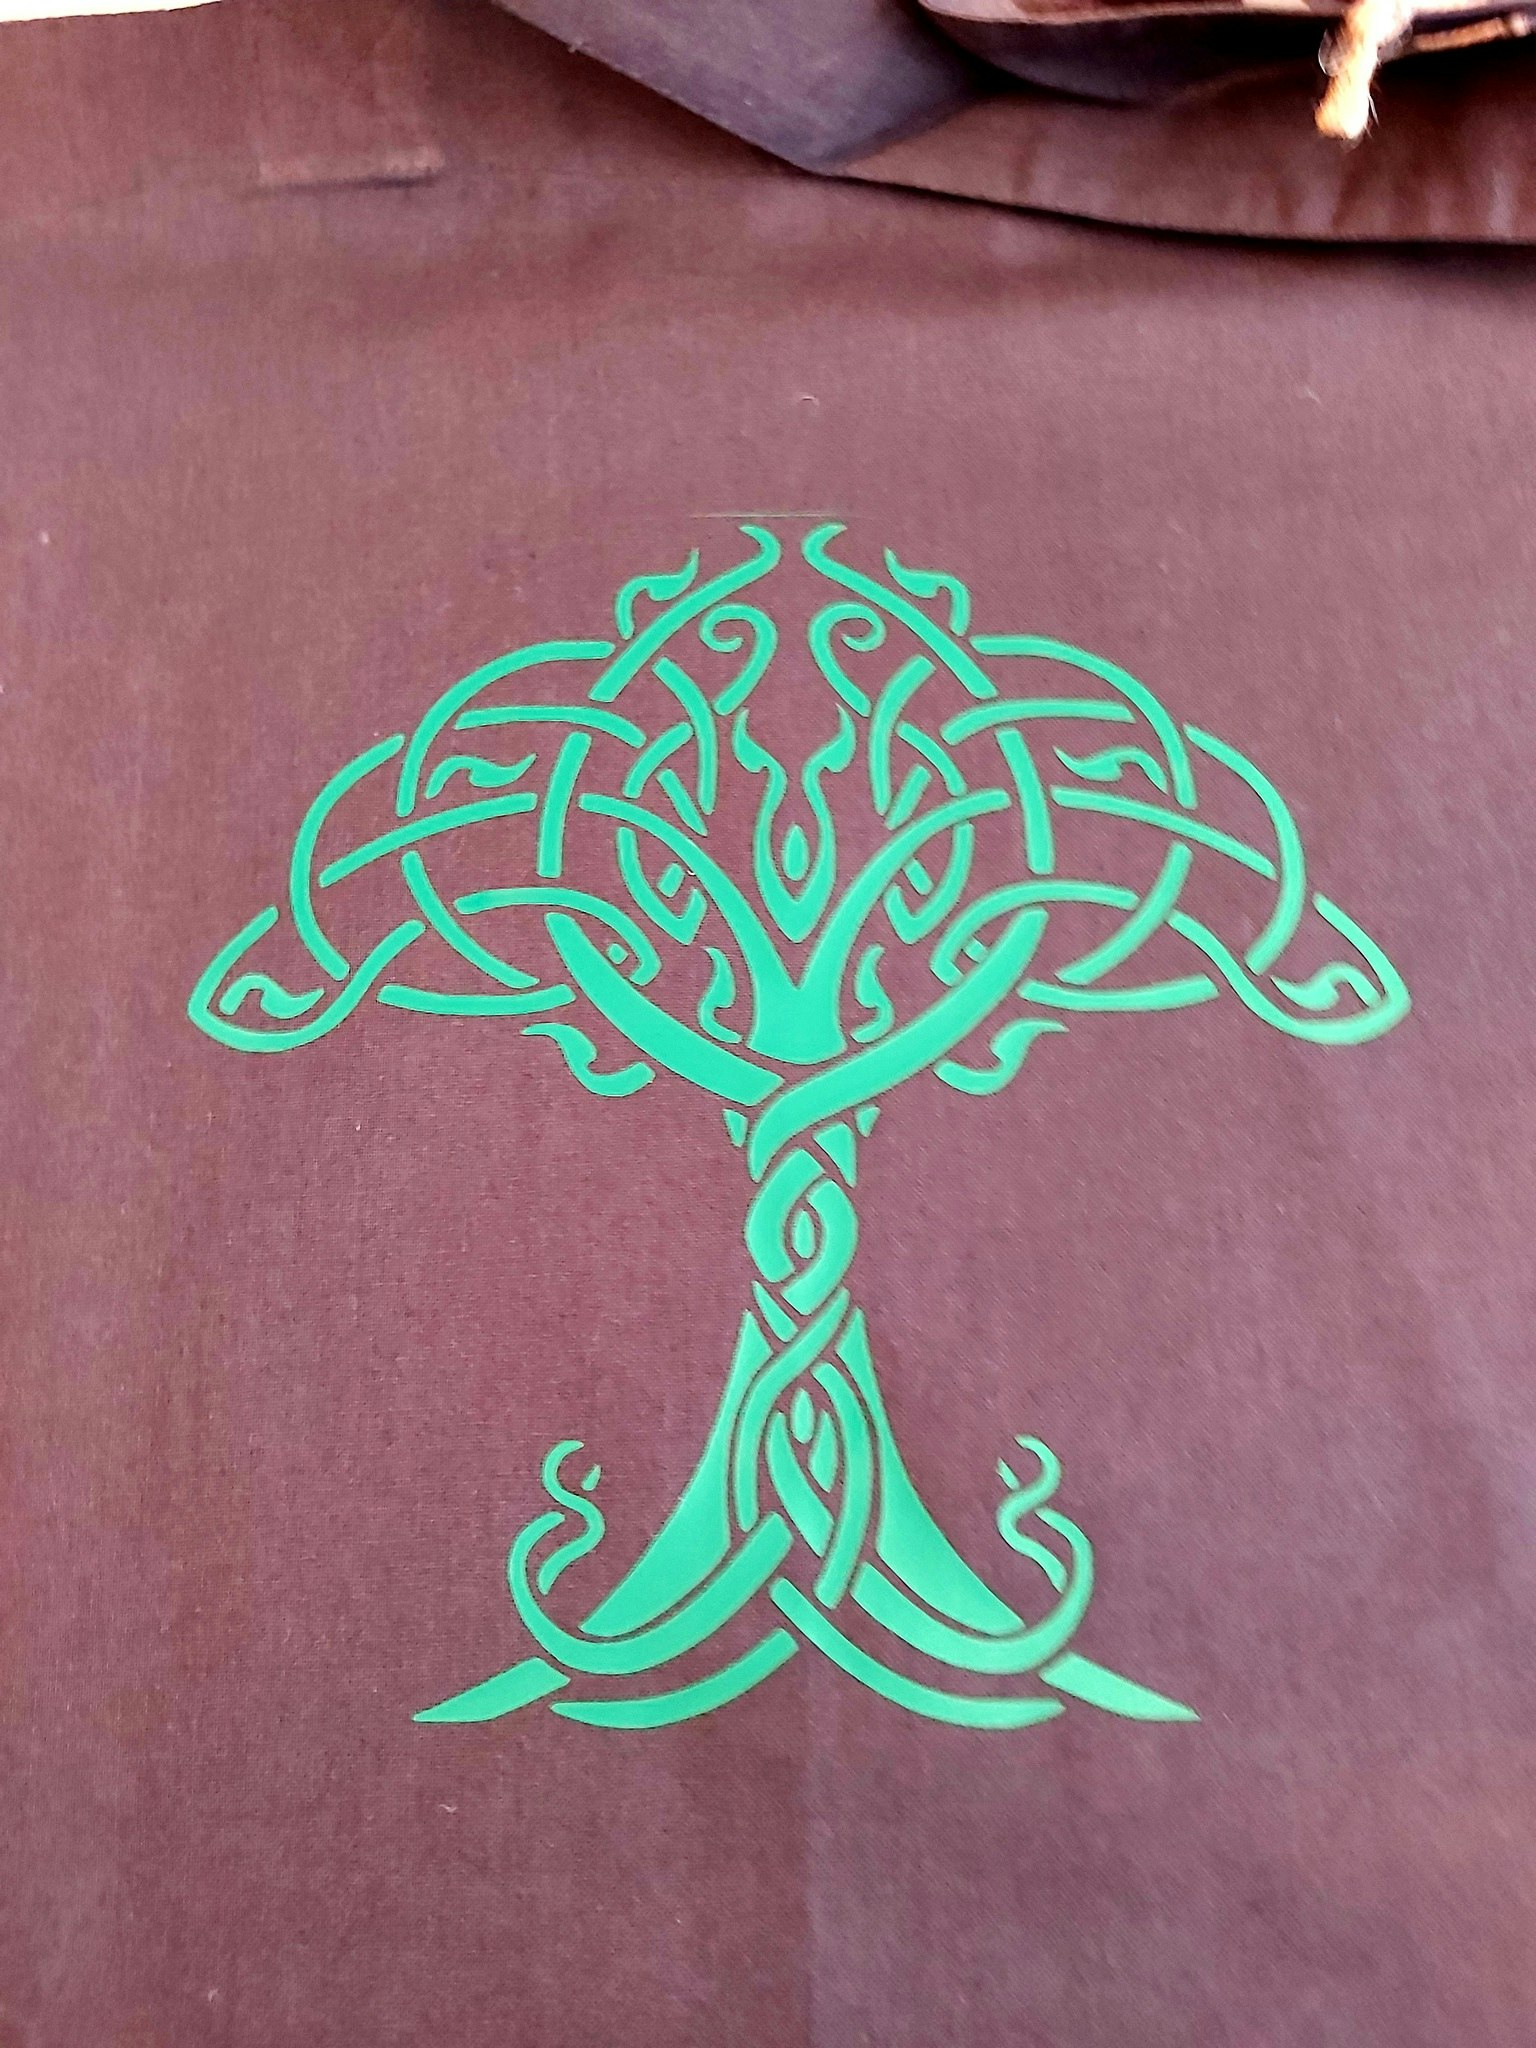 Yggdrasil - Tree of Life - tygpåse